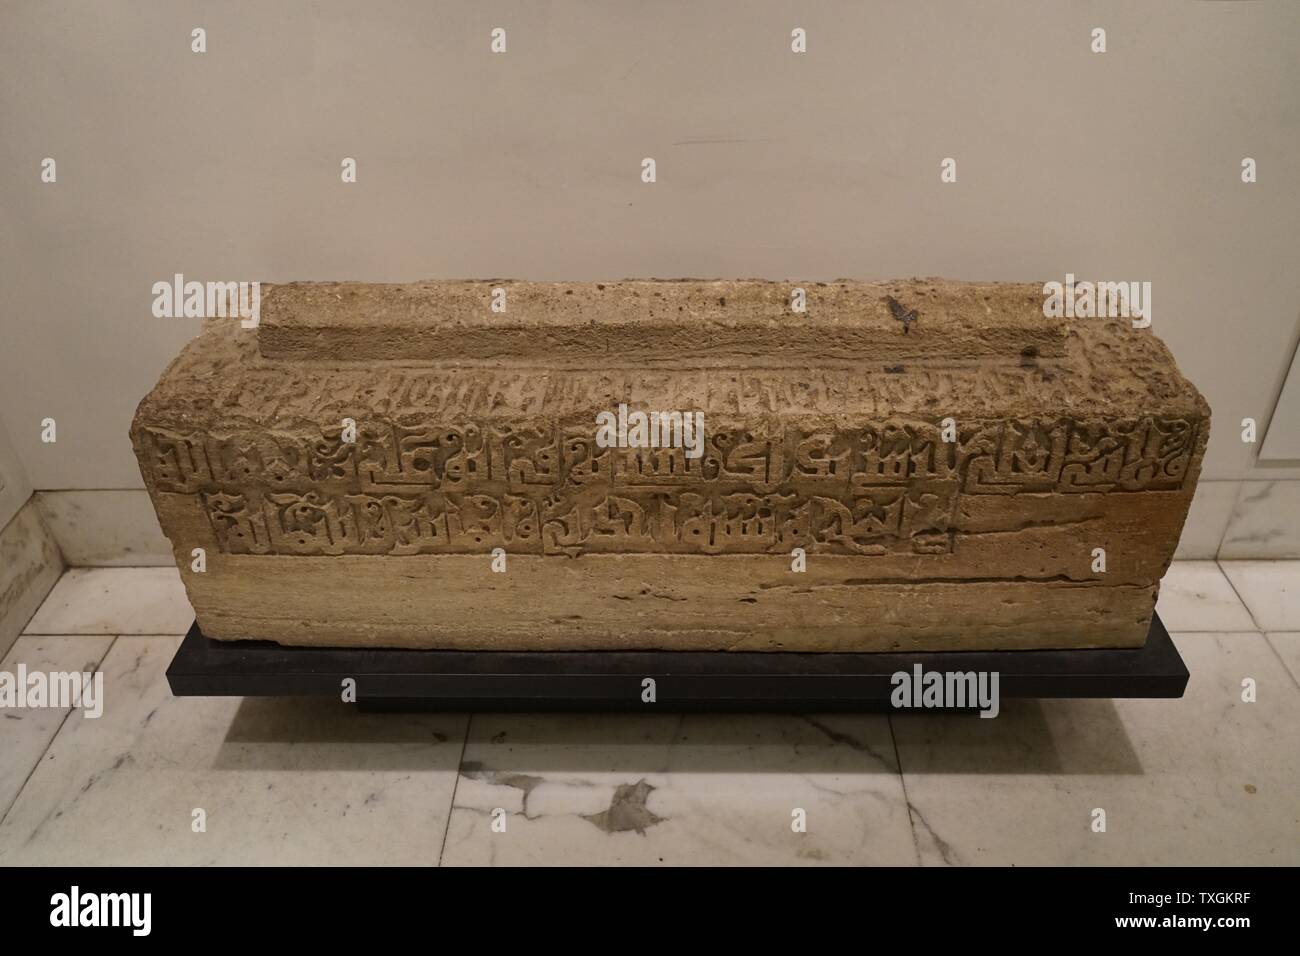 Crested Tumba cubierta con la inscripción de Siraf, Irán. Fecha siglo 10 Foto de stock